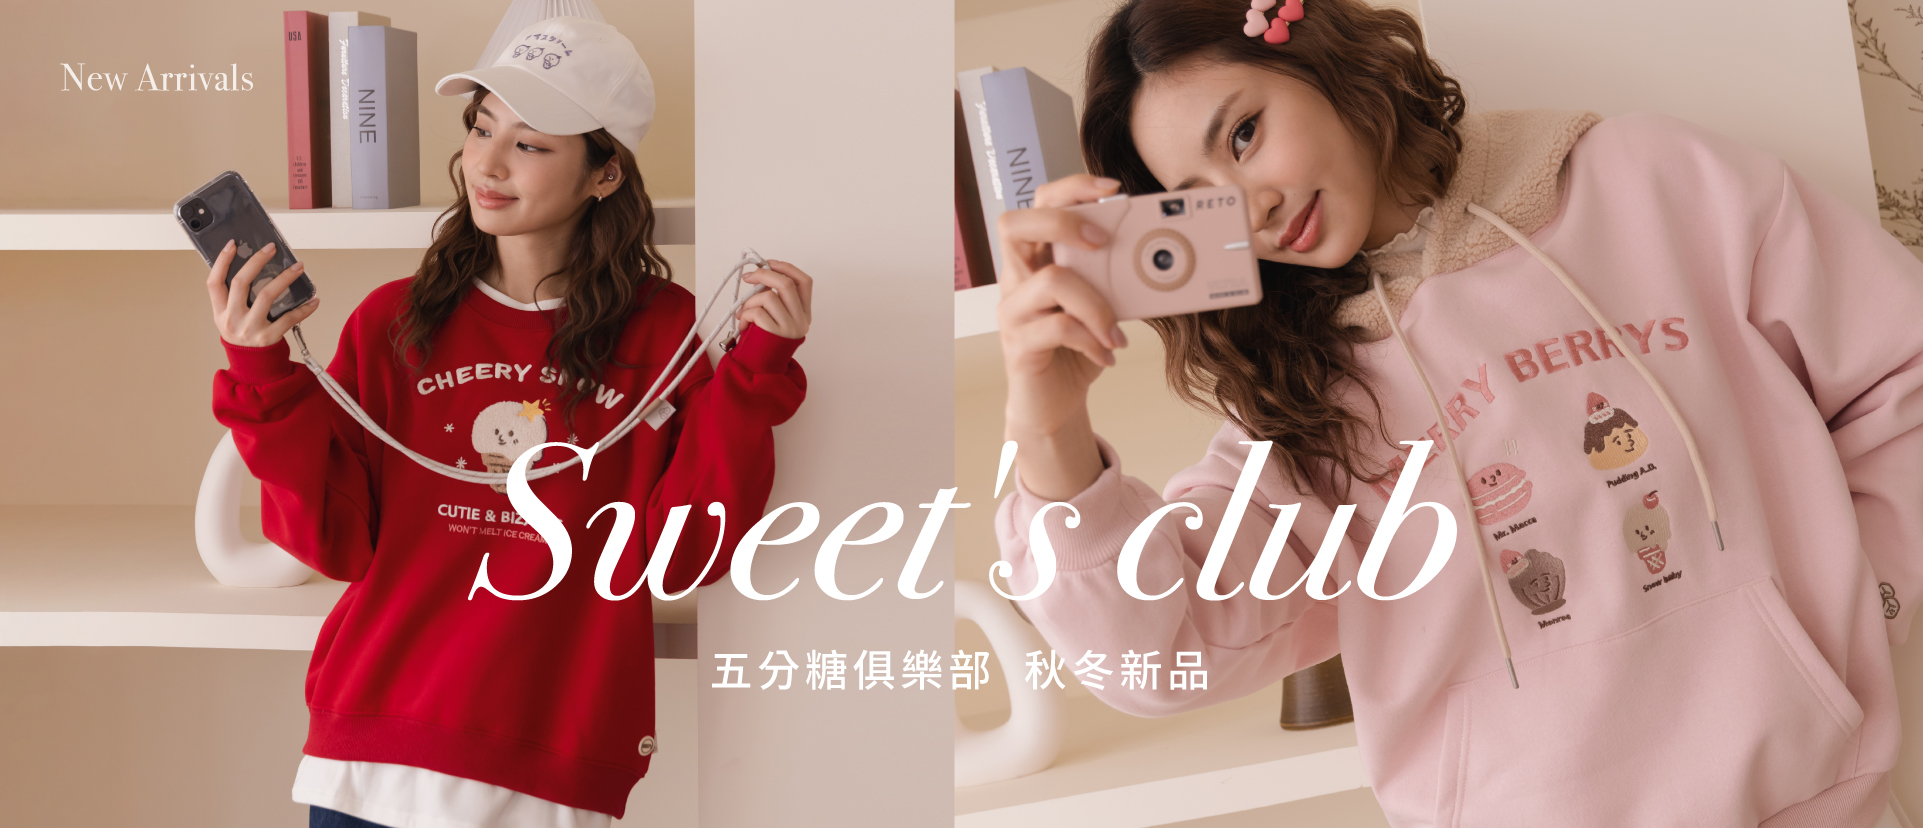 Sweet's club五分糖